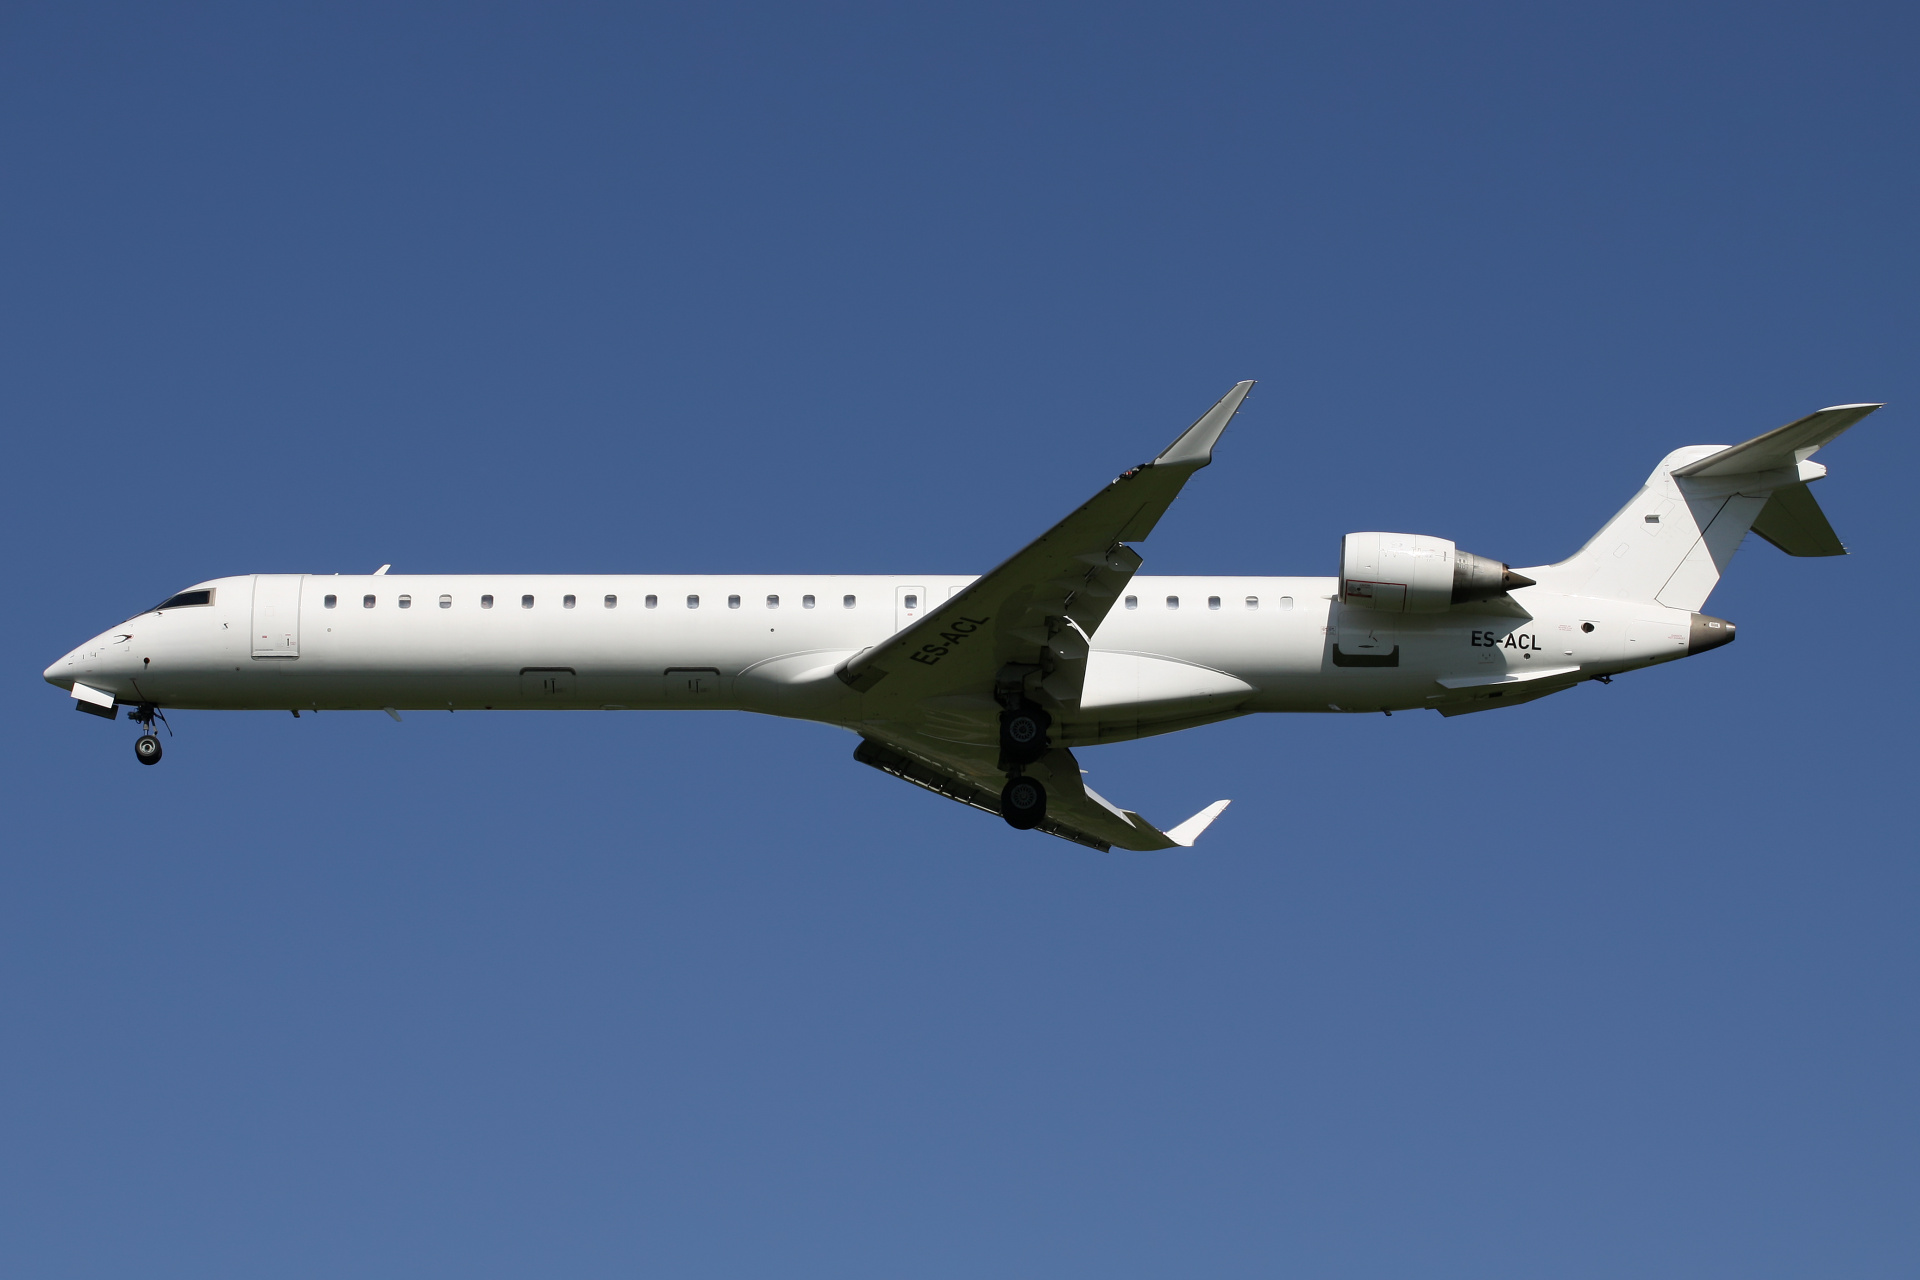 ES-ACL (no livery) (Aircraft » EPWA Spotting » Mitsubishi Regional Jet » CRJ-900 » Nordica)